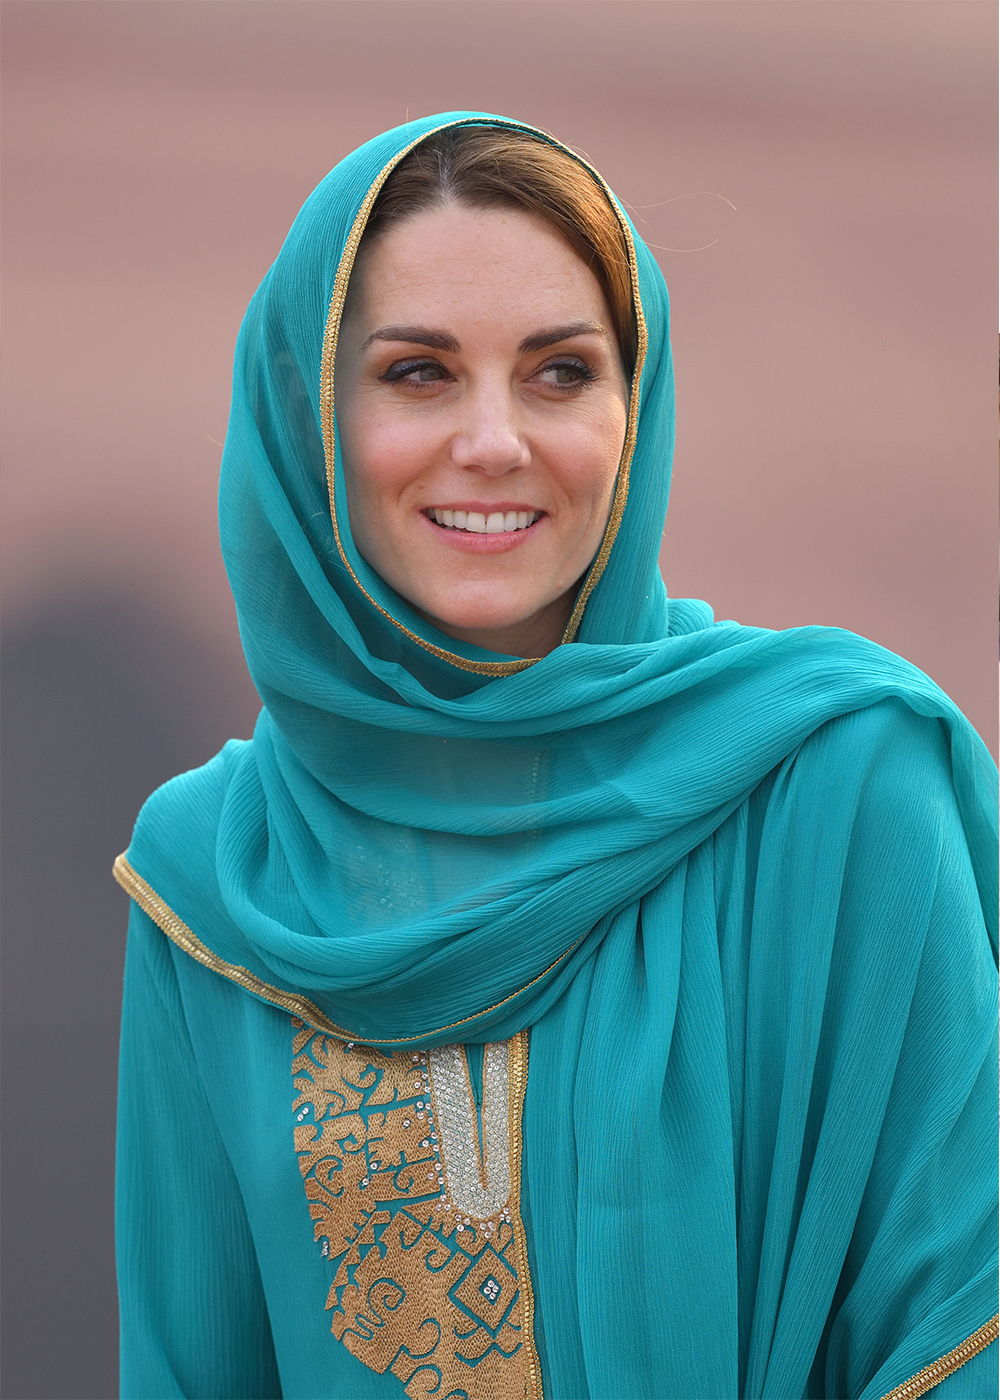 Kate Middleton wore a headscarf Mosque Pakistan